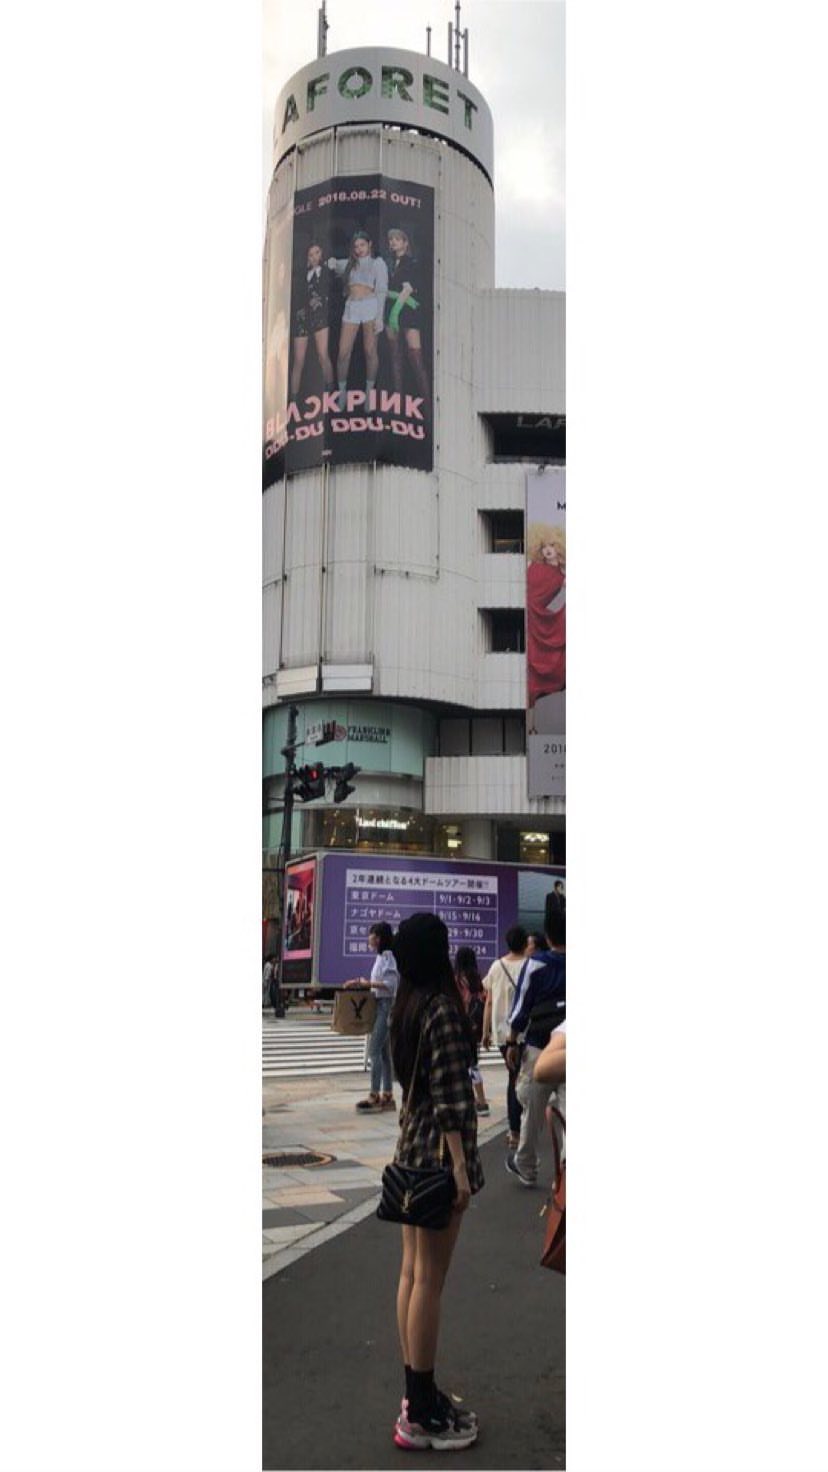 BLACKPINK Jisoo Instagram Story 27 August 2018 Japan billboard ads